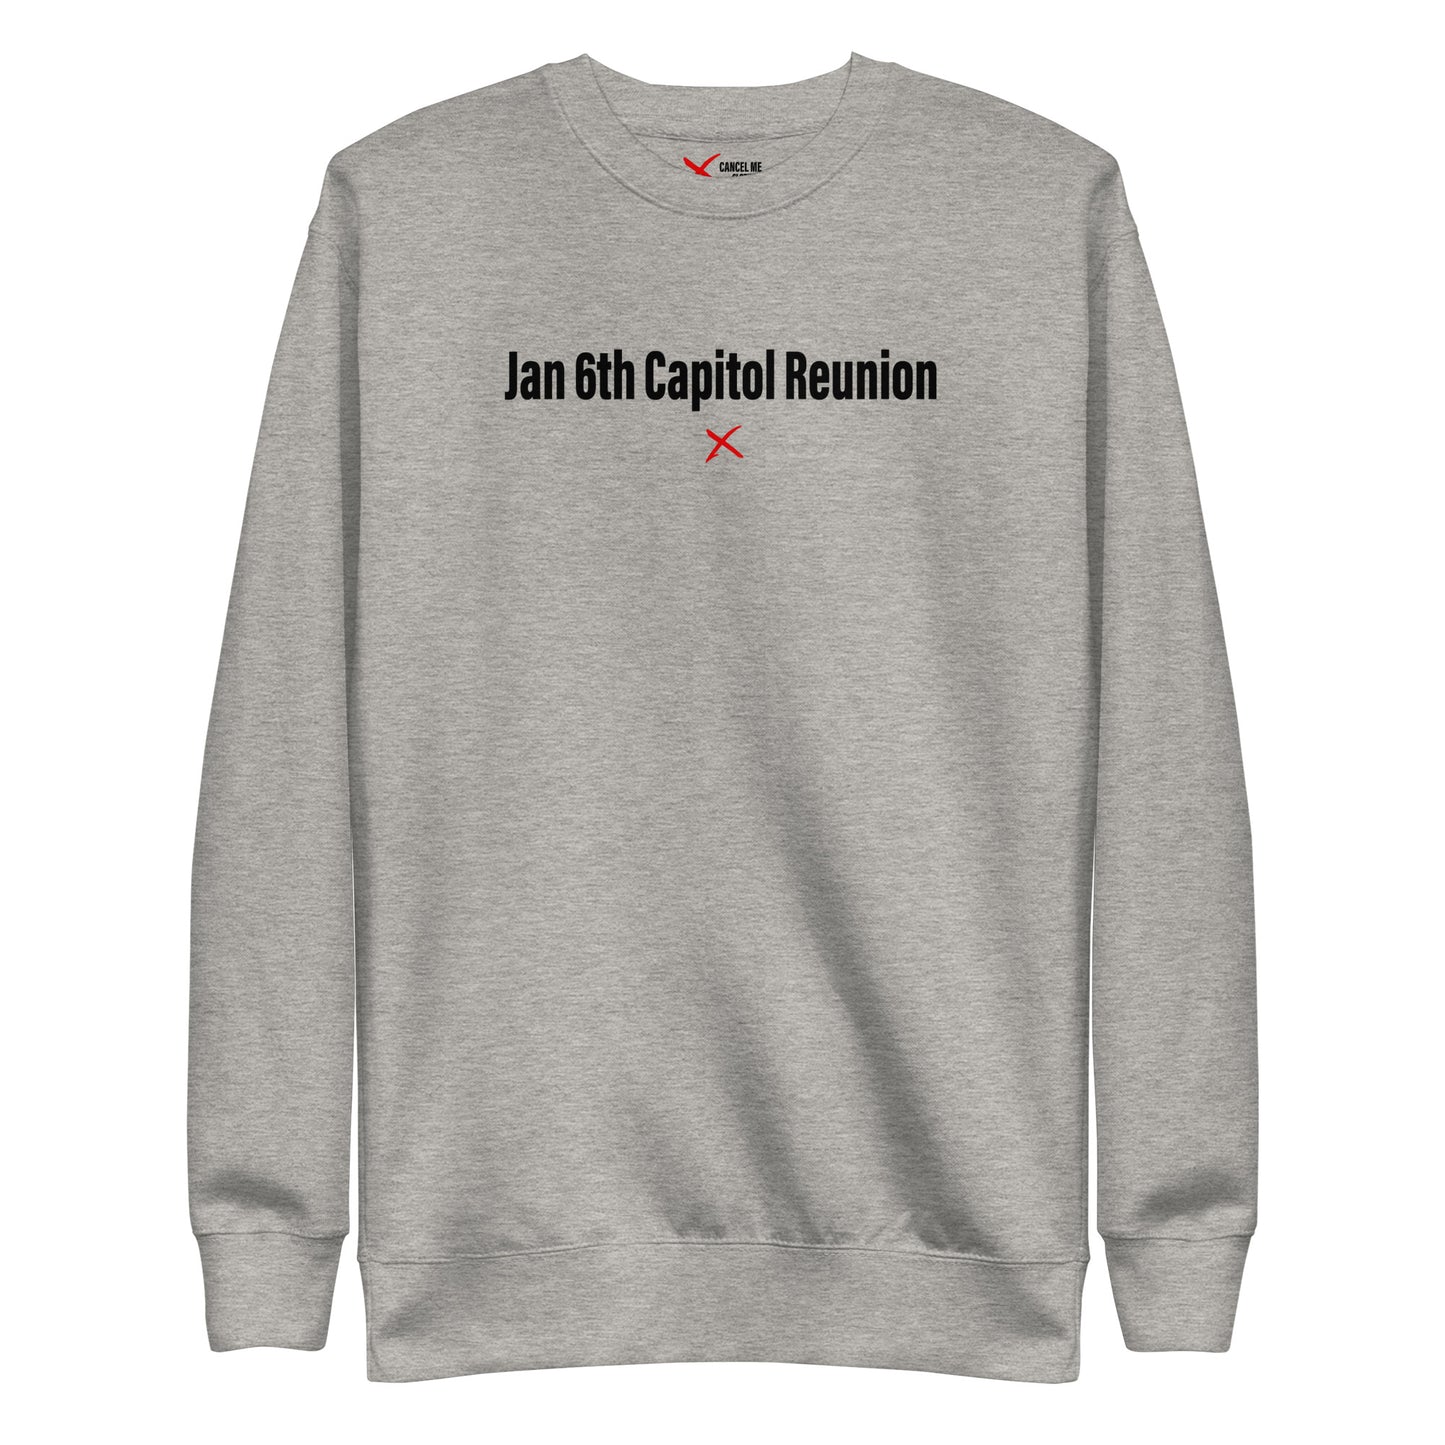 Jan 6th Capitol Reunion - Sweatshirt